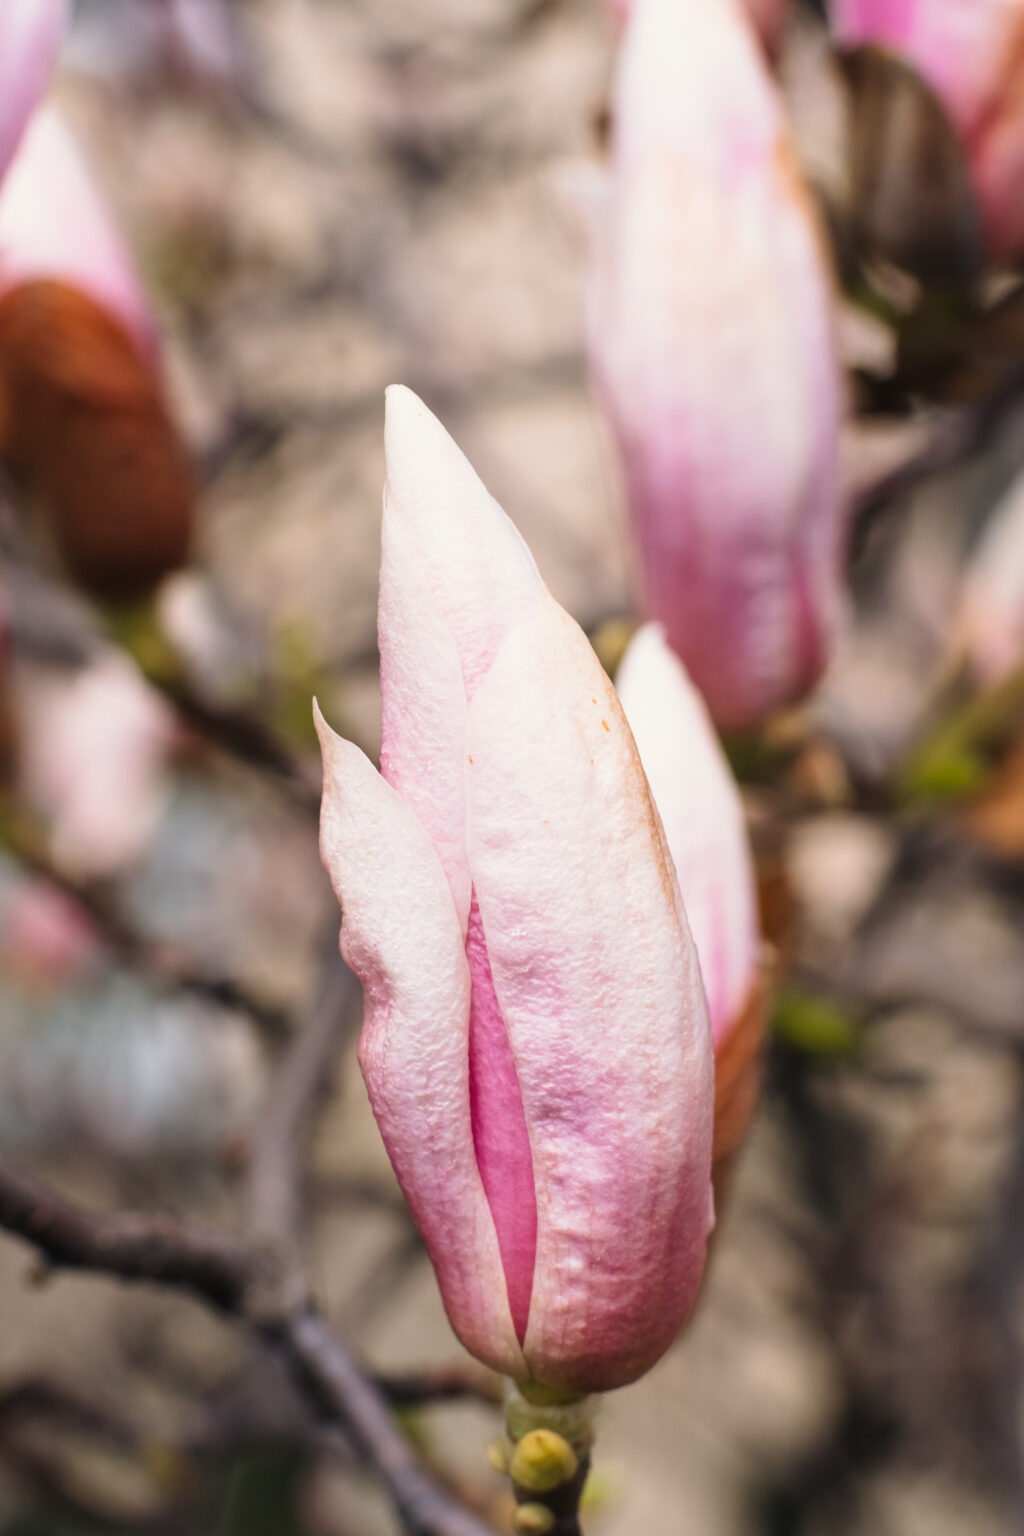 Magnolia tree blossom closeup 6 - free stock photo